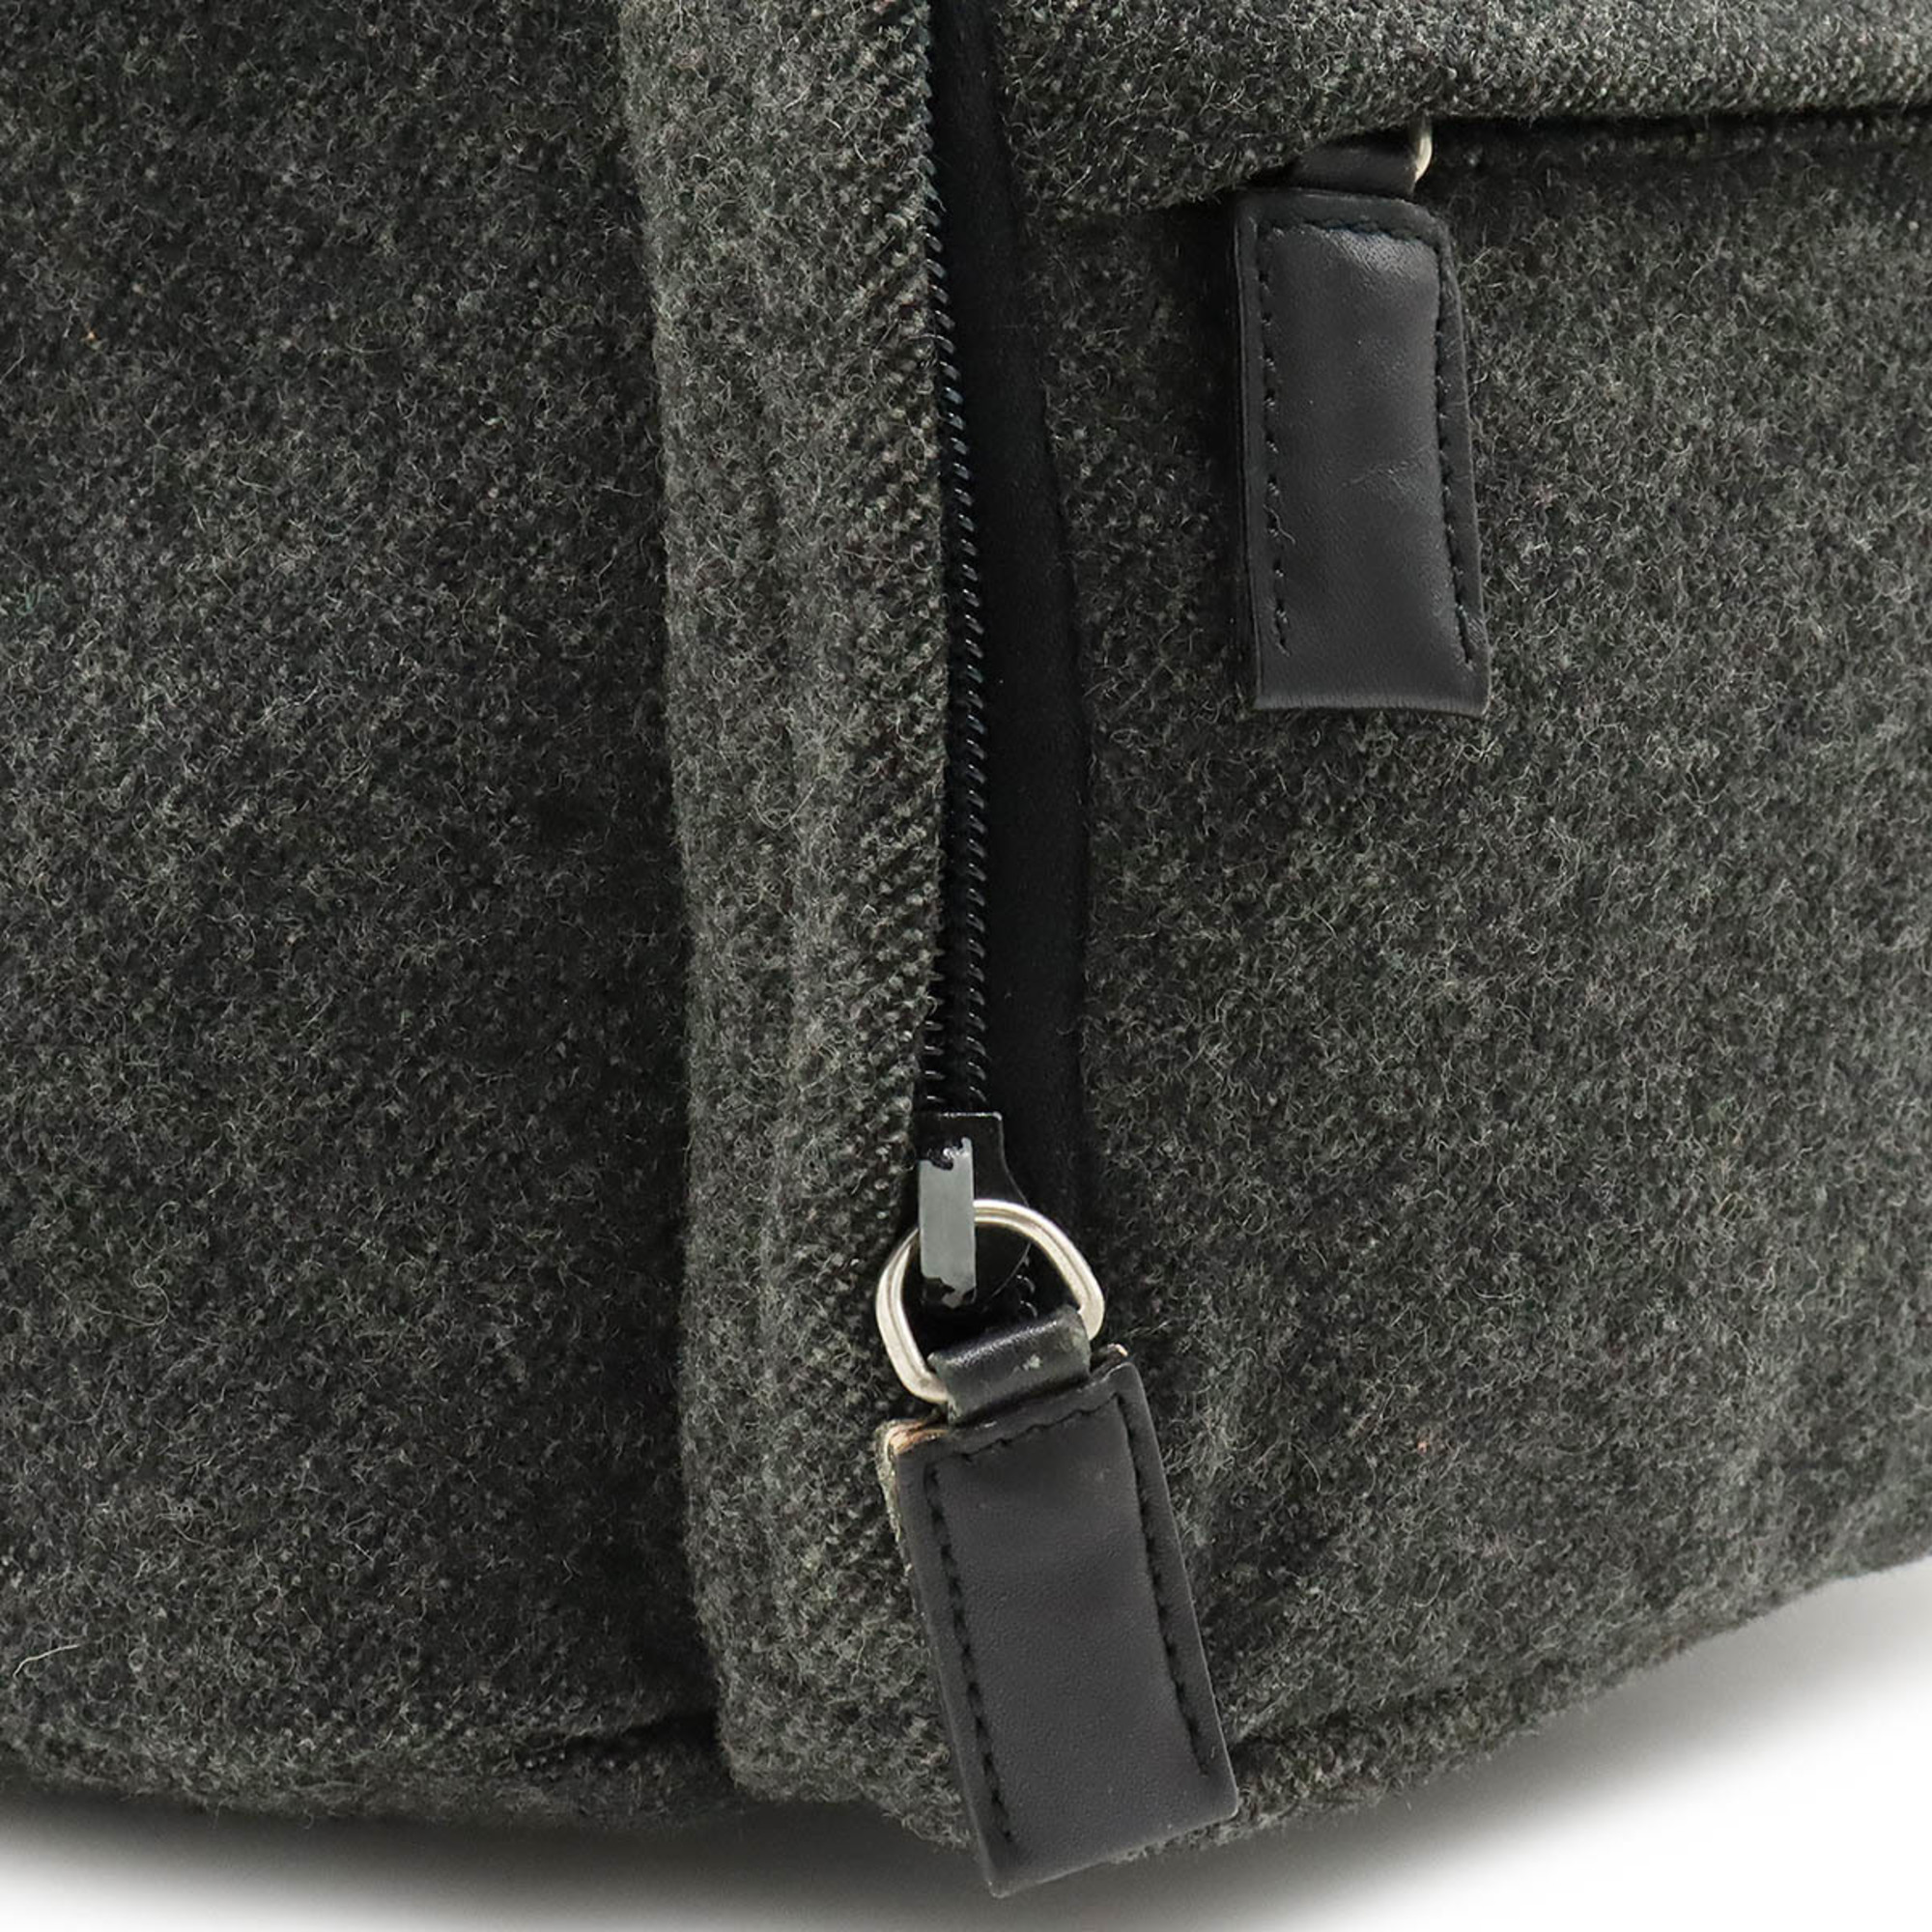 PRADA Prada Backpack Rucksack Wool Canvas Gray Black V203